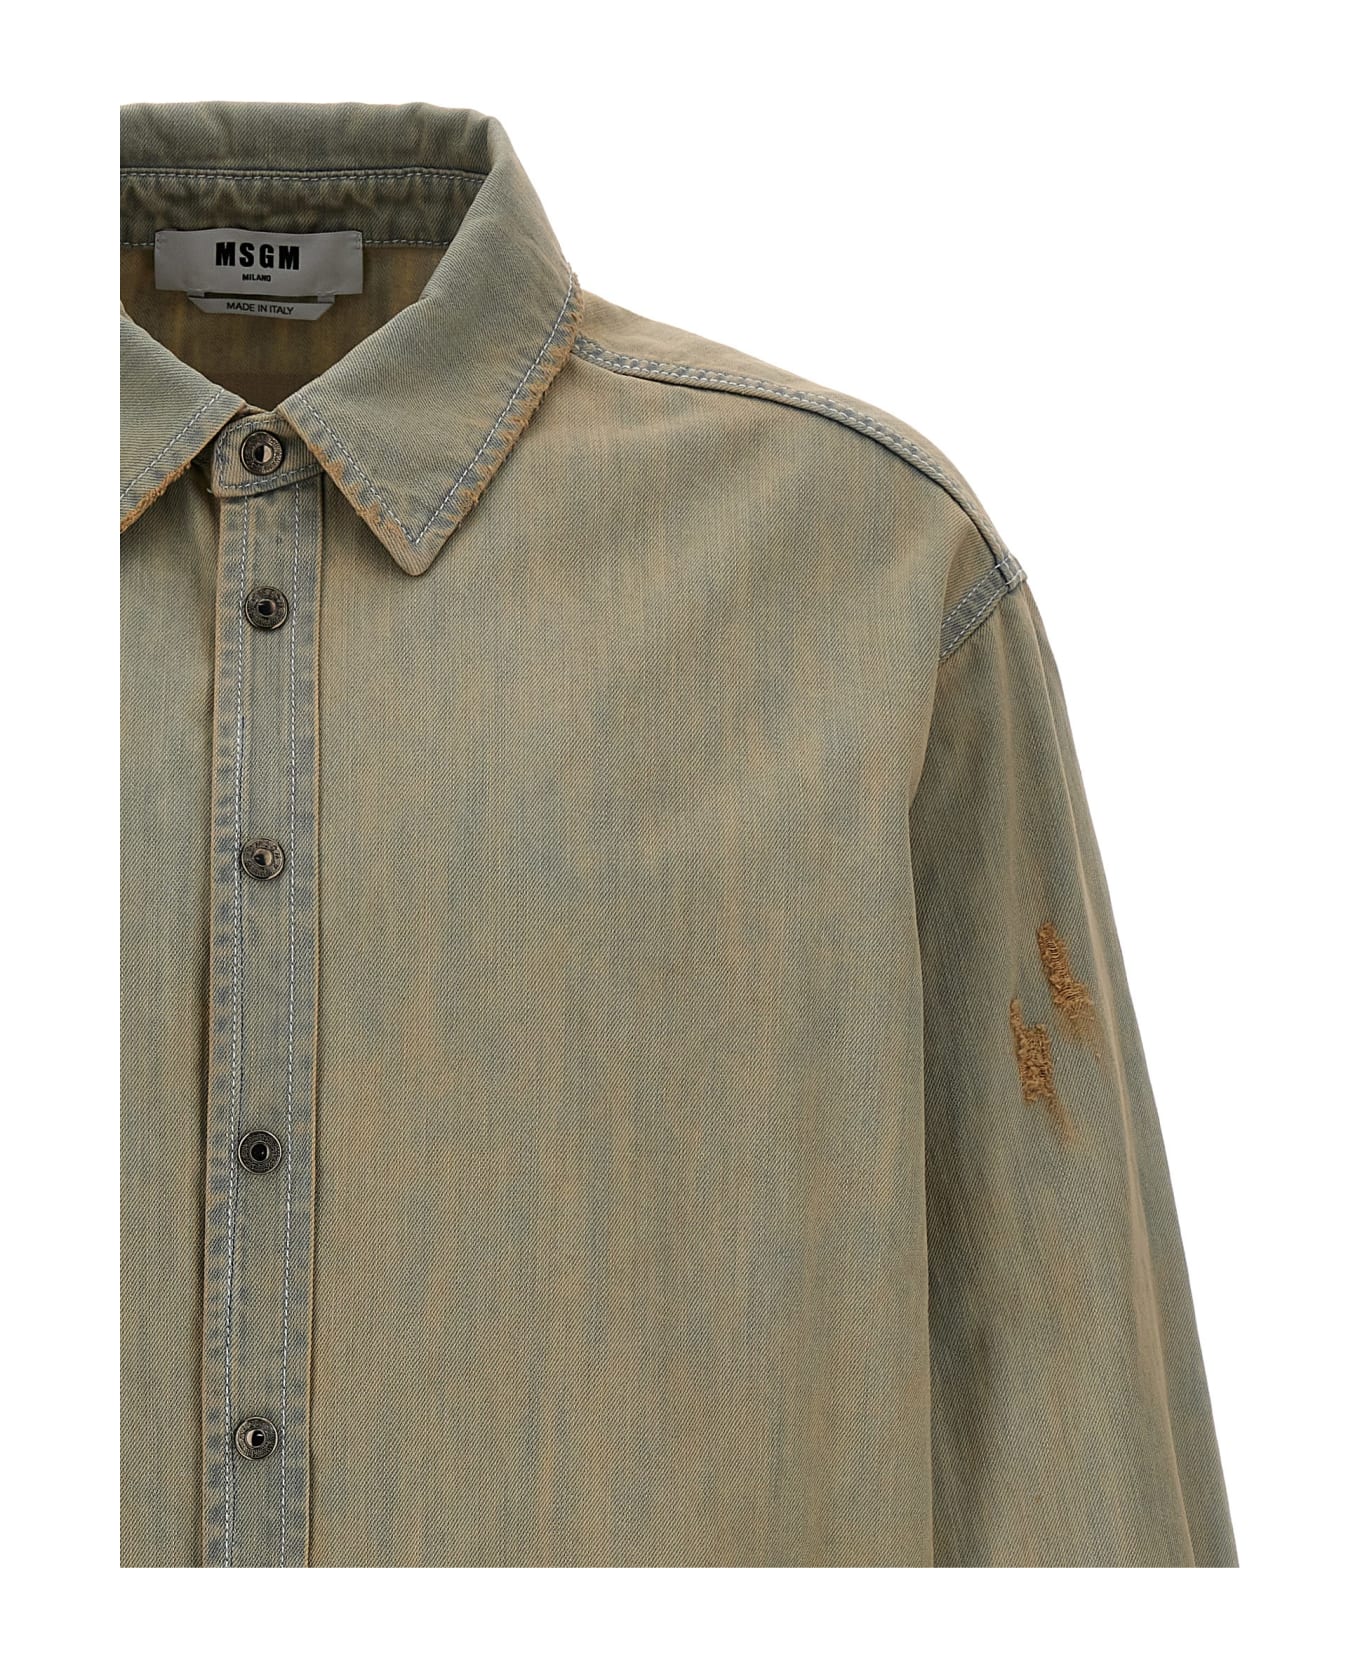 MSGM Stone Wash Denim Shirt - Beige